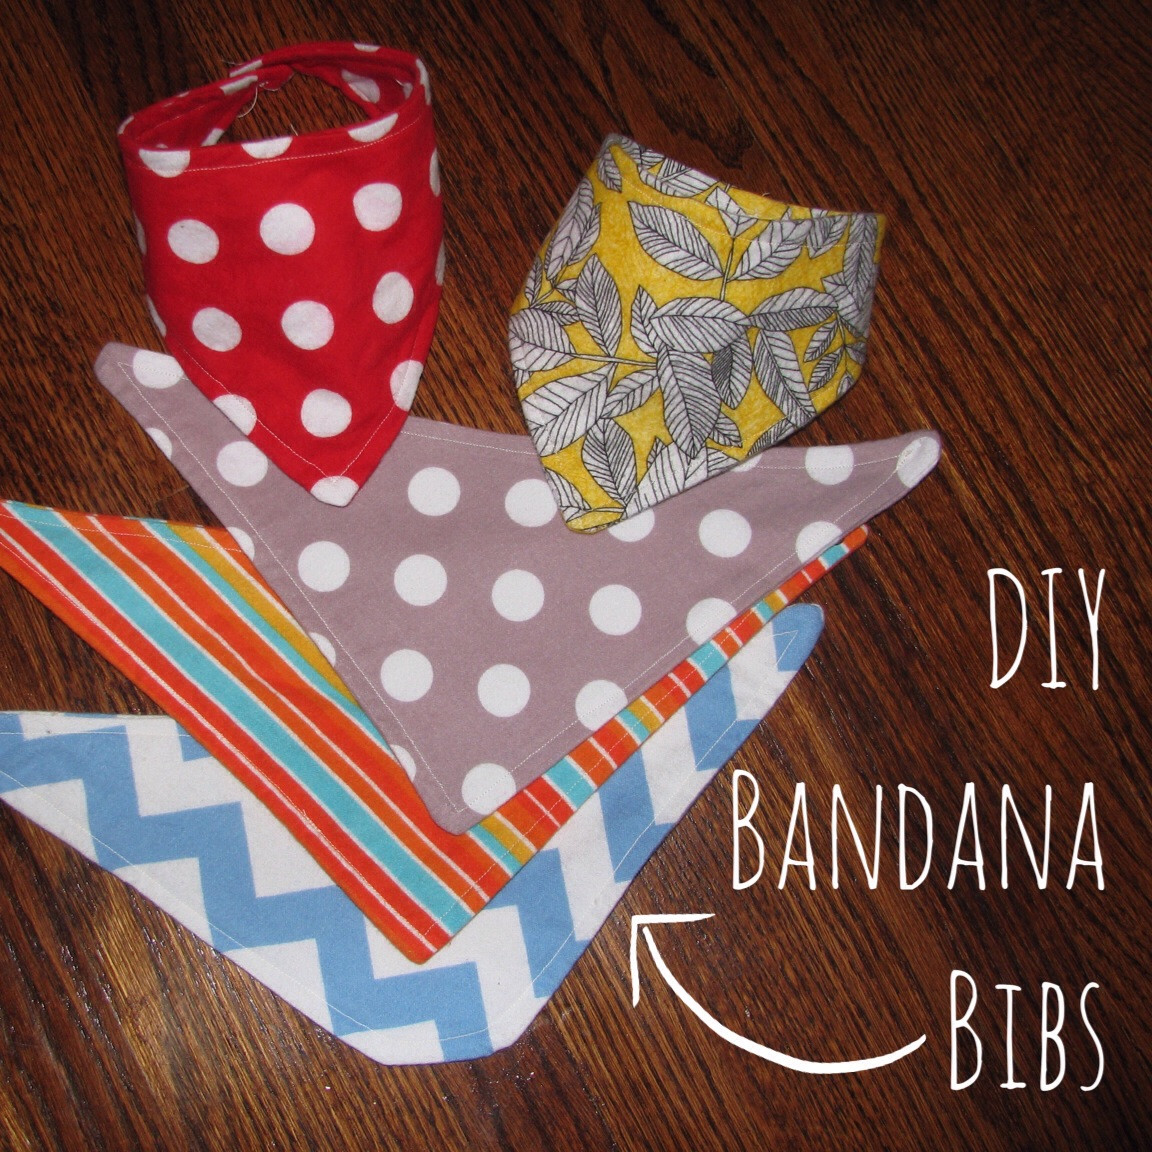 DIY Baby Bandana Bibs
 DIY Bandana Bibs